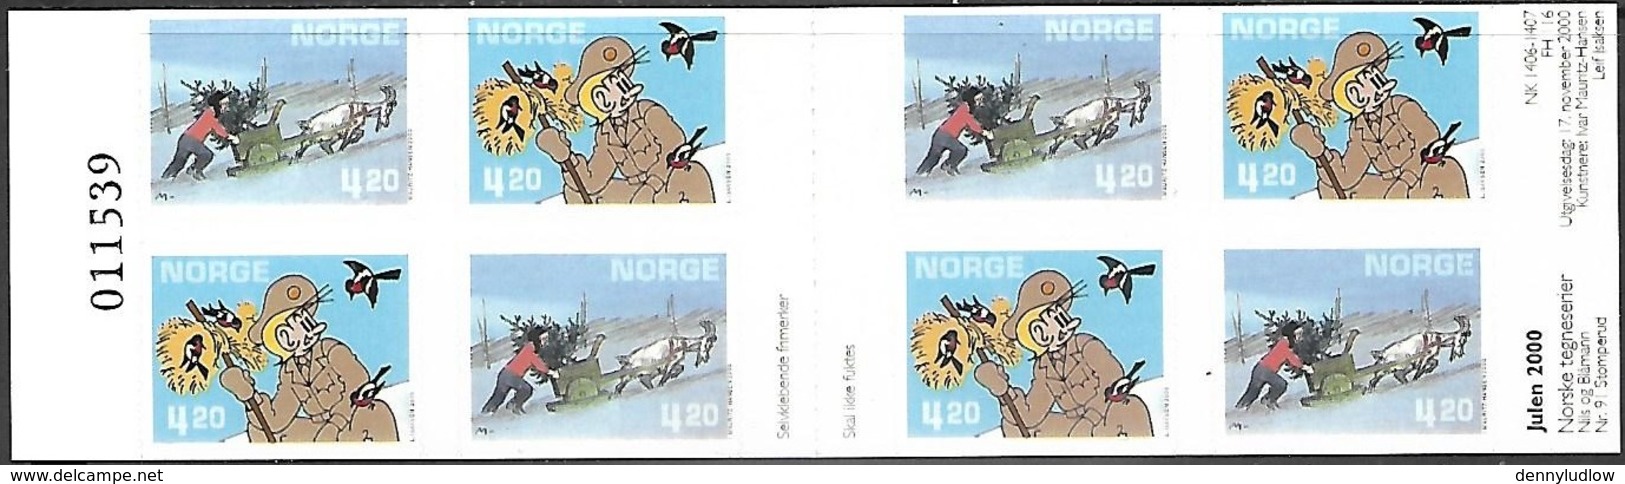 Norway   2000   Sc#1271b  Comics Booklet MNH   2016 Scott Value $12 - Libretti